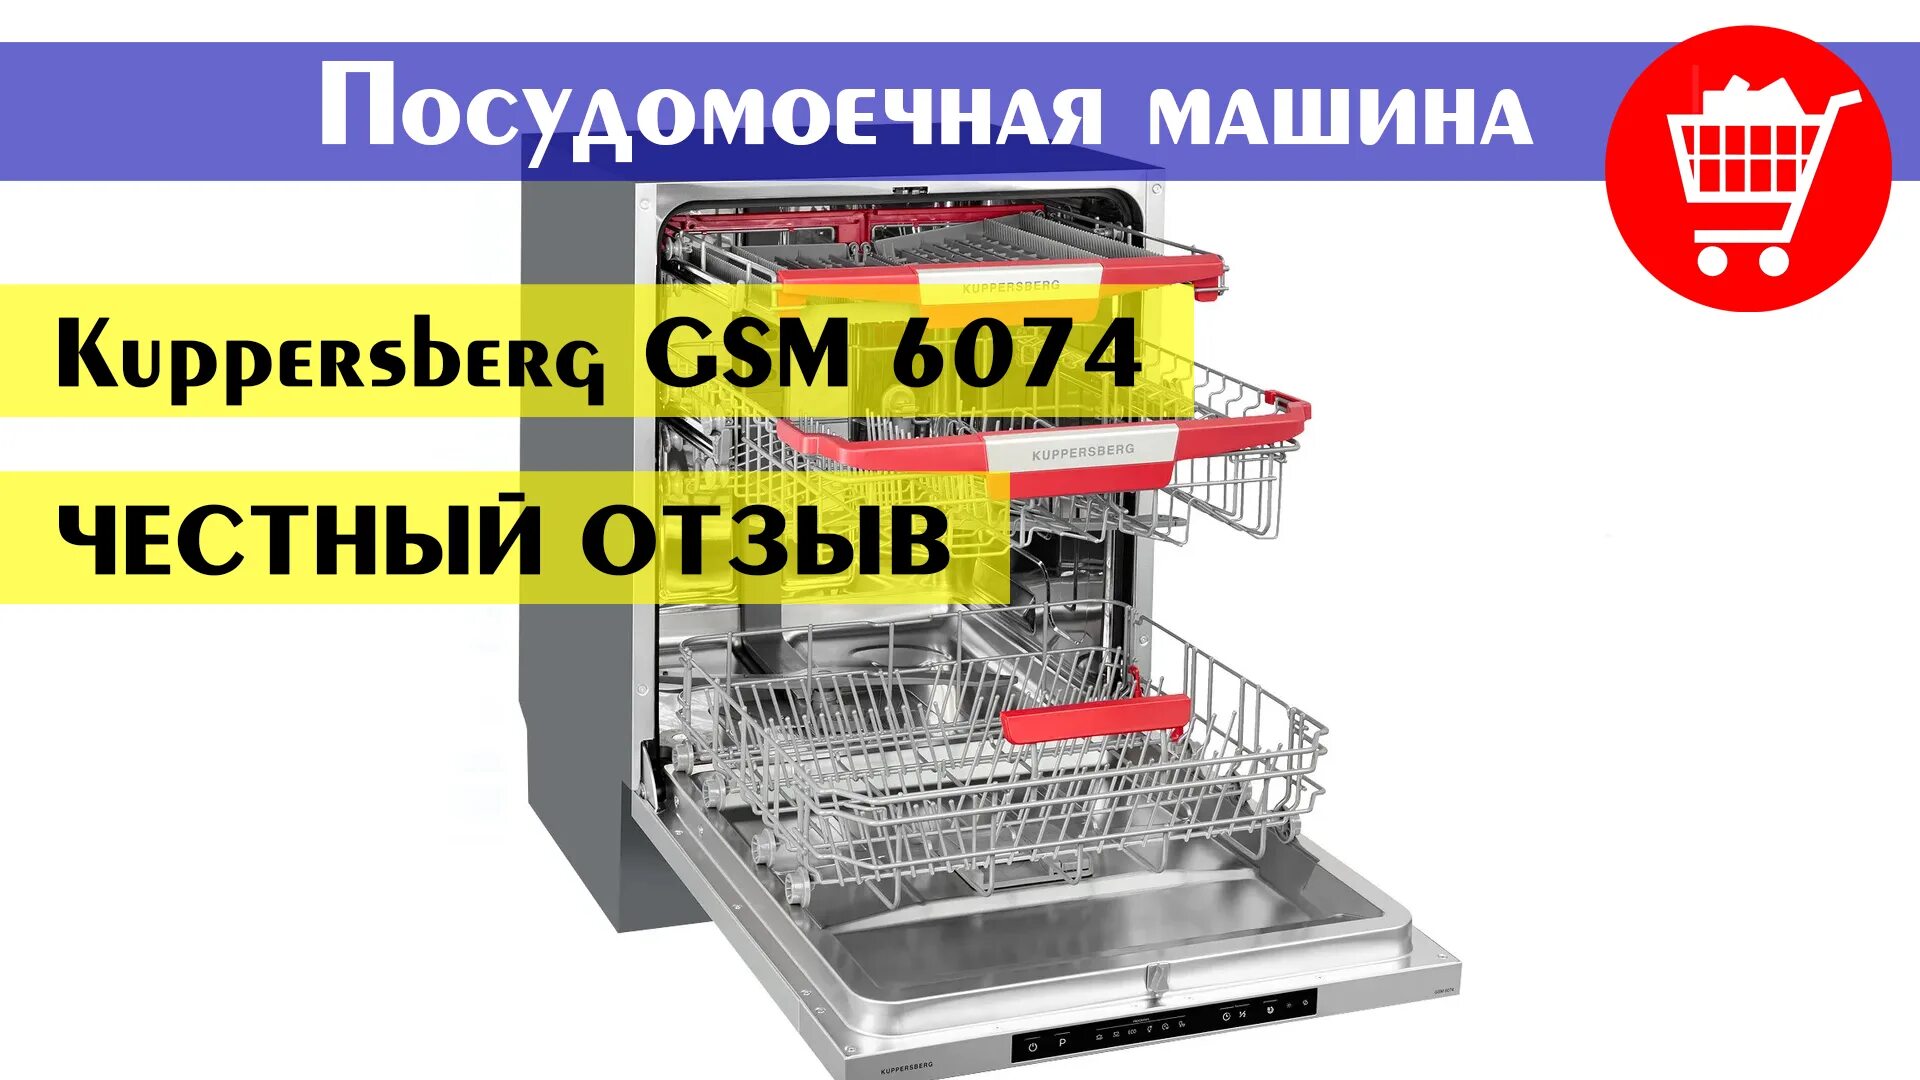 Kuppersberg gsm отзывы. Посудомоечная машина Kuppersberg GSM 6074. Посудомоечная машина встраиваемая Kuppersberg GSM 4574. Встраиваемая посудомоечная машина 60 см Kuppersberg GSM 6074. Kuppersberg GS 6074.